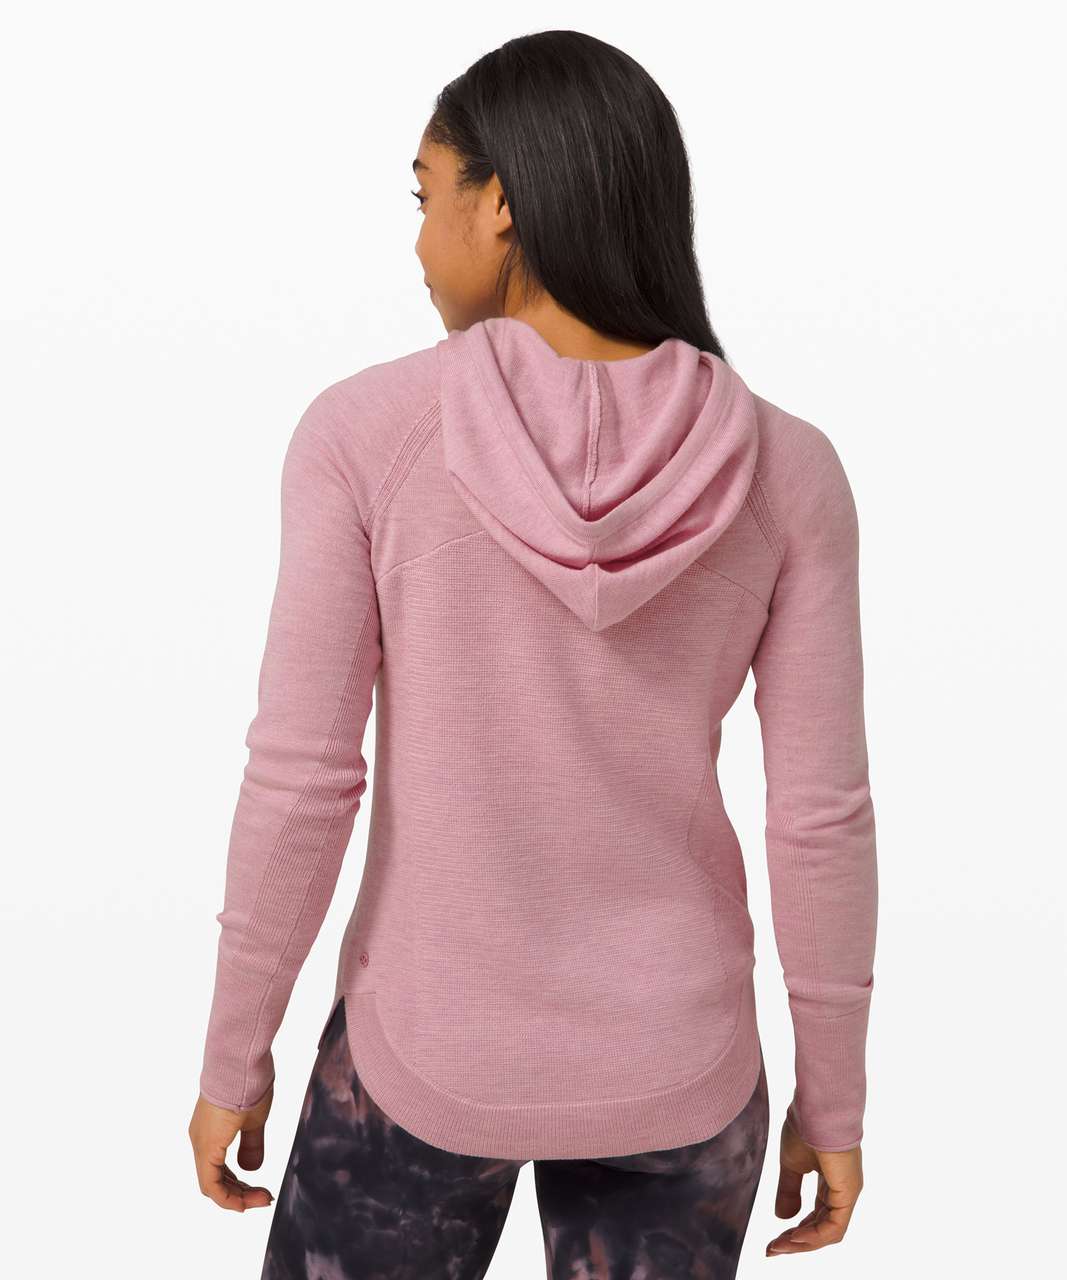 Lululemon Sit in Lotus Hoodie Sweater - Heathered Pink Taupe